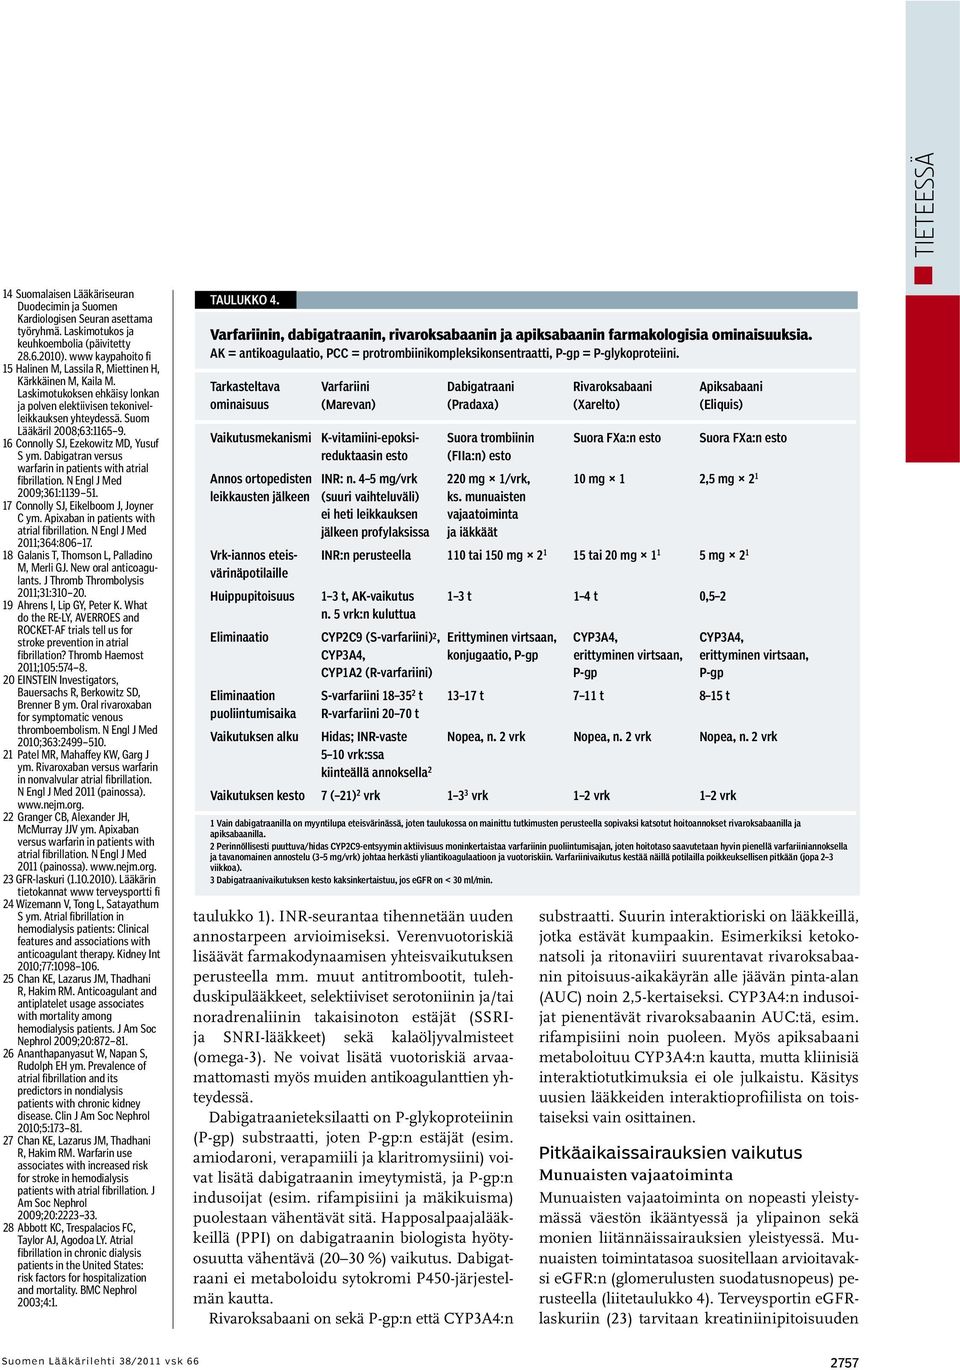 16 Connolly SJ, Ezekowitz MD, Yusuf S ym. Dabigatran versus warfarin in patients with atrial fibrillation. N Engl J Med 2009;361:1139 51. 17 Connolly SJ, Eikelboom J, Joyner C ym.